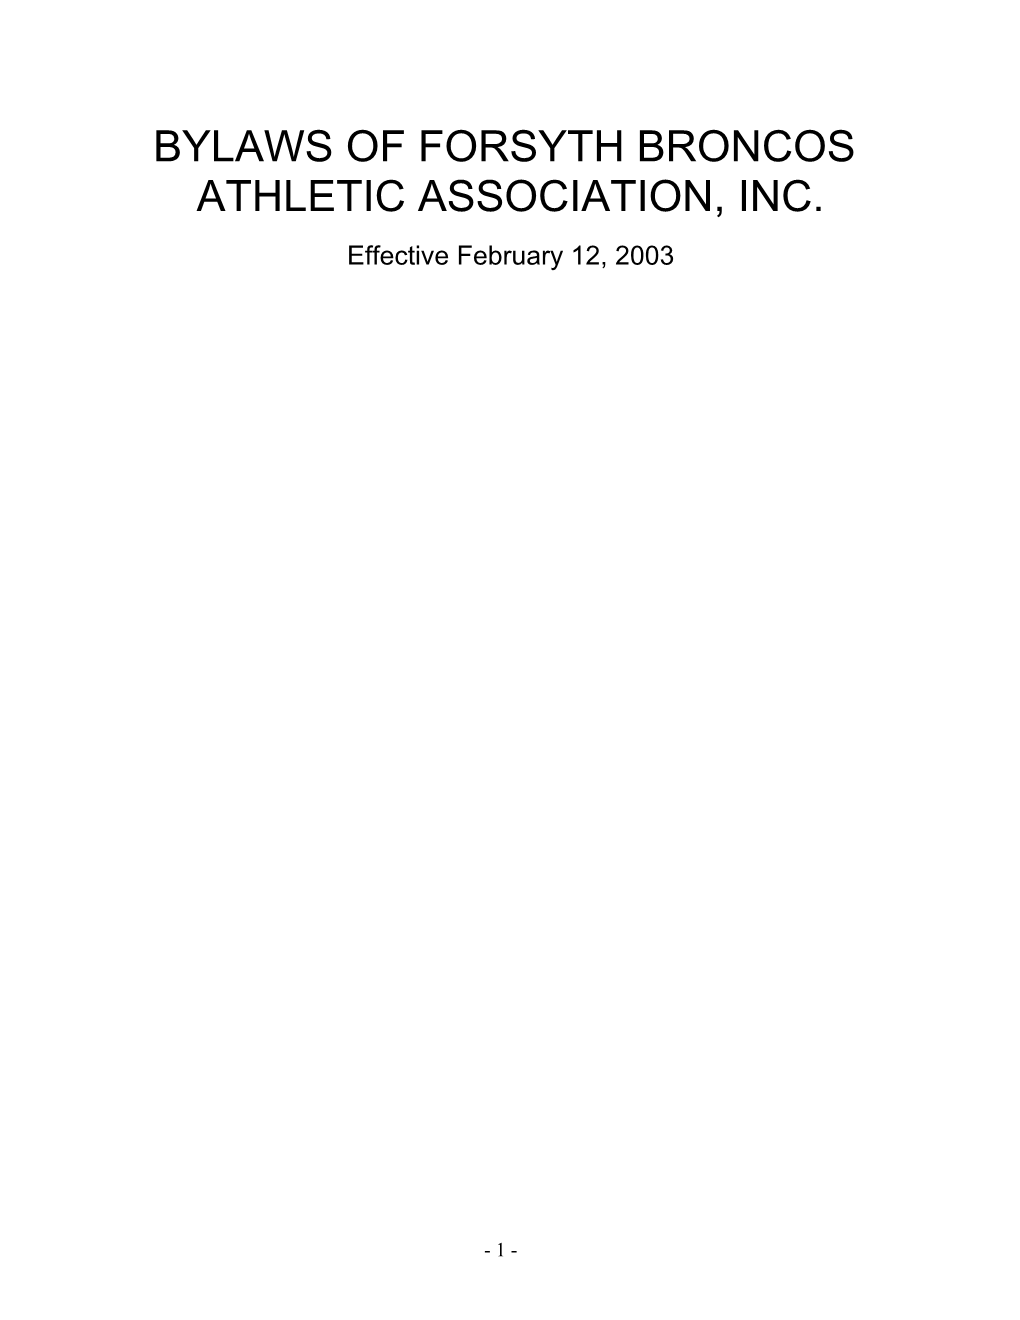 Forsyth Broncos Athletic Association, Inc